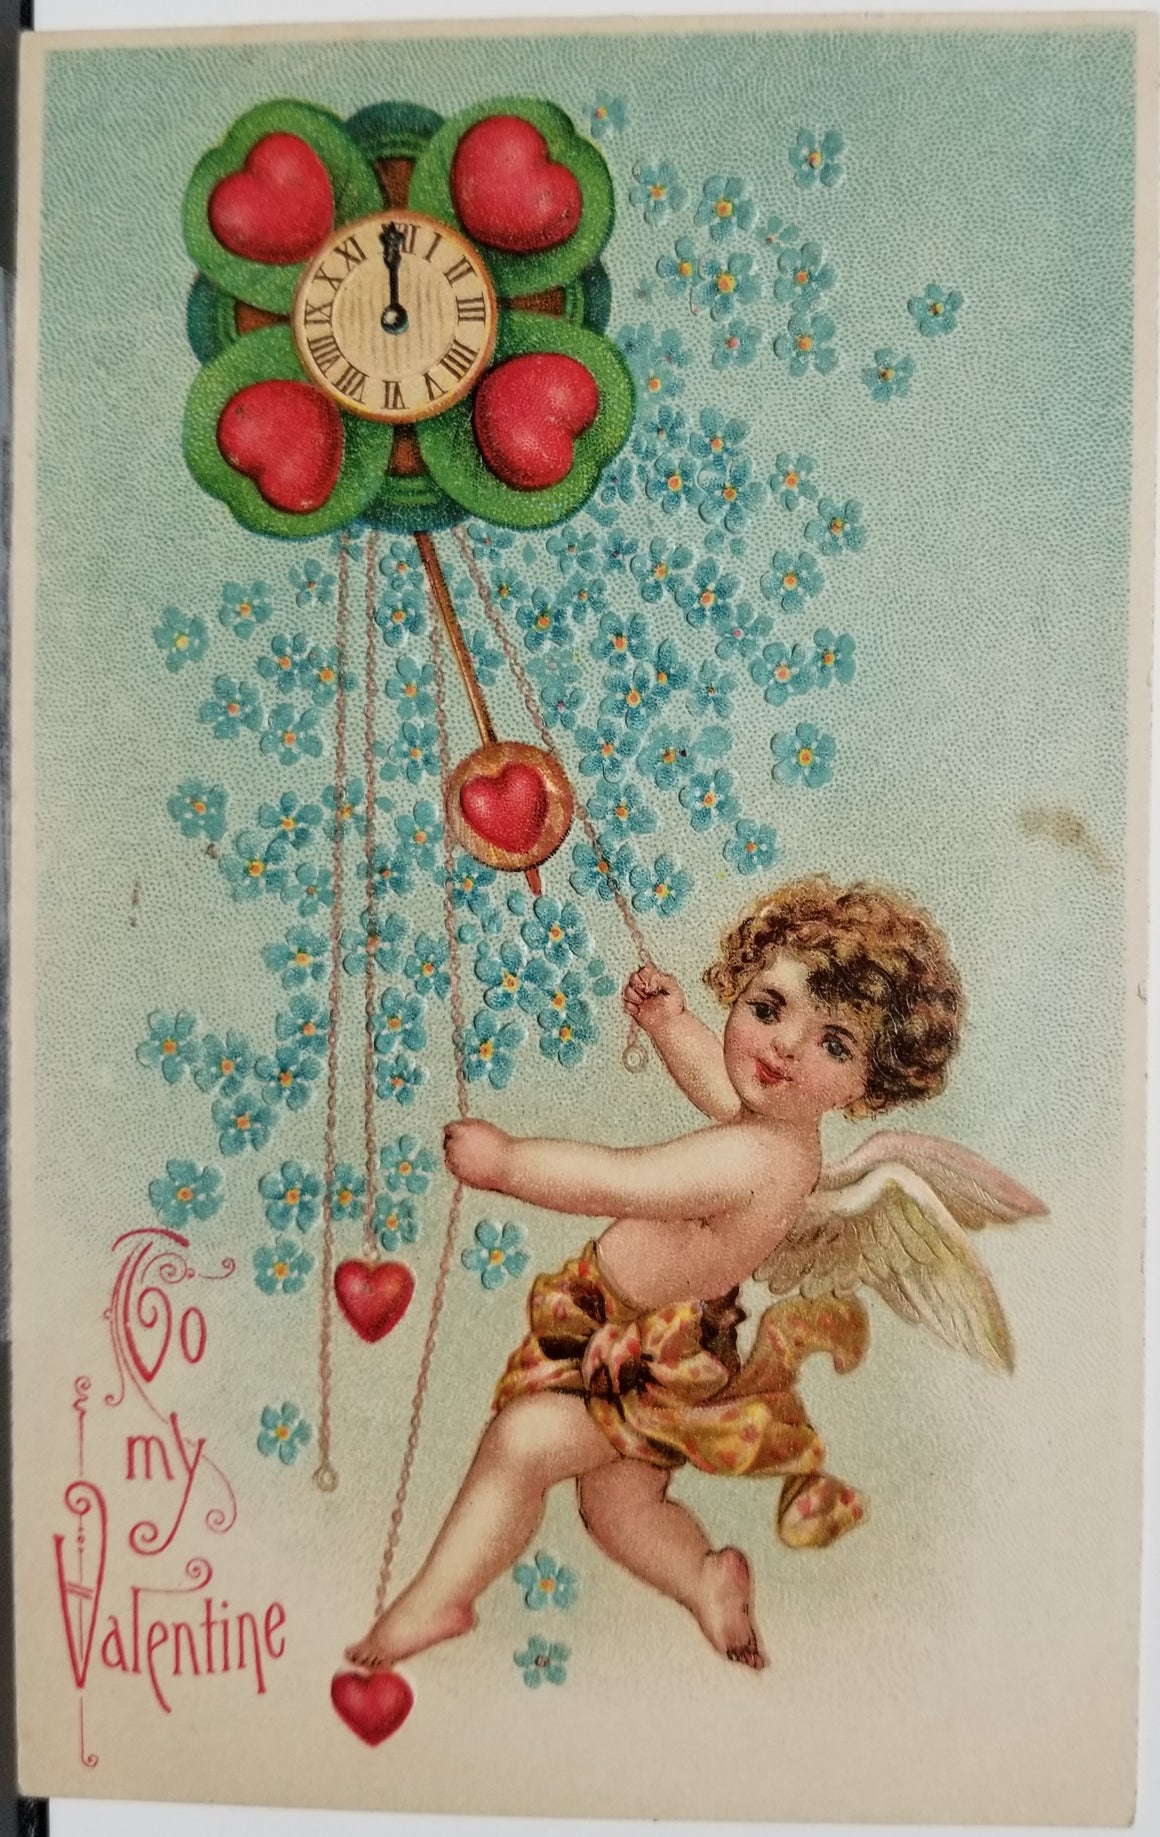 Valentine Postcard Cupid Pulling Heart Strings on Clock BW Publishing Series 310